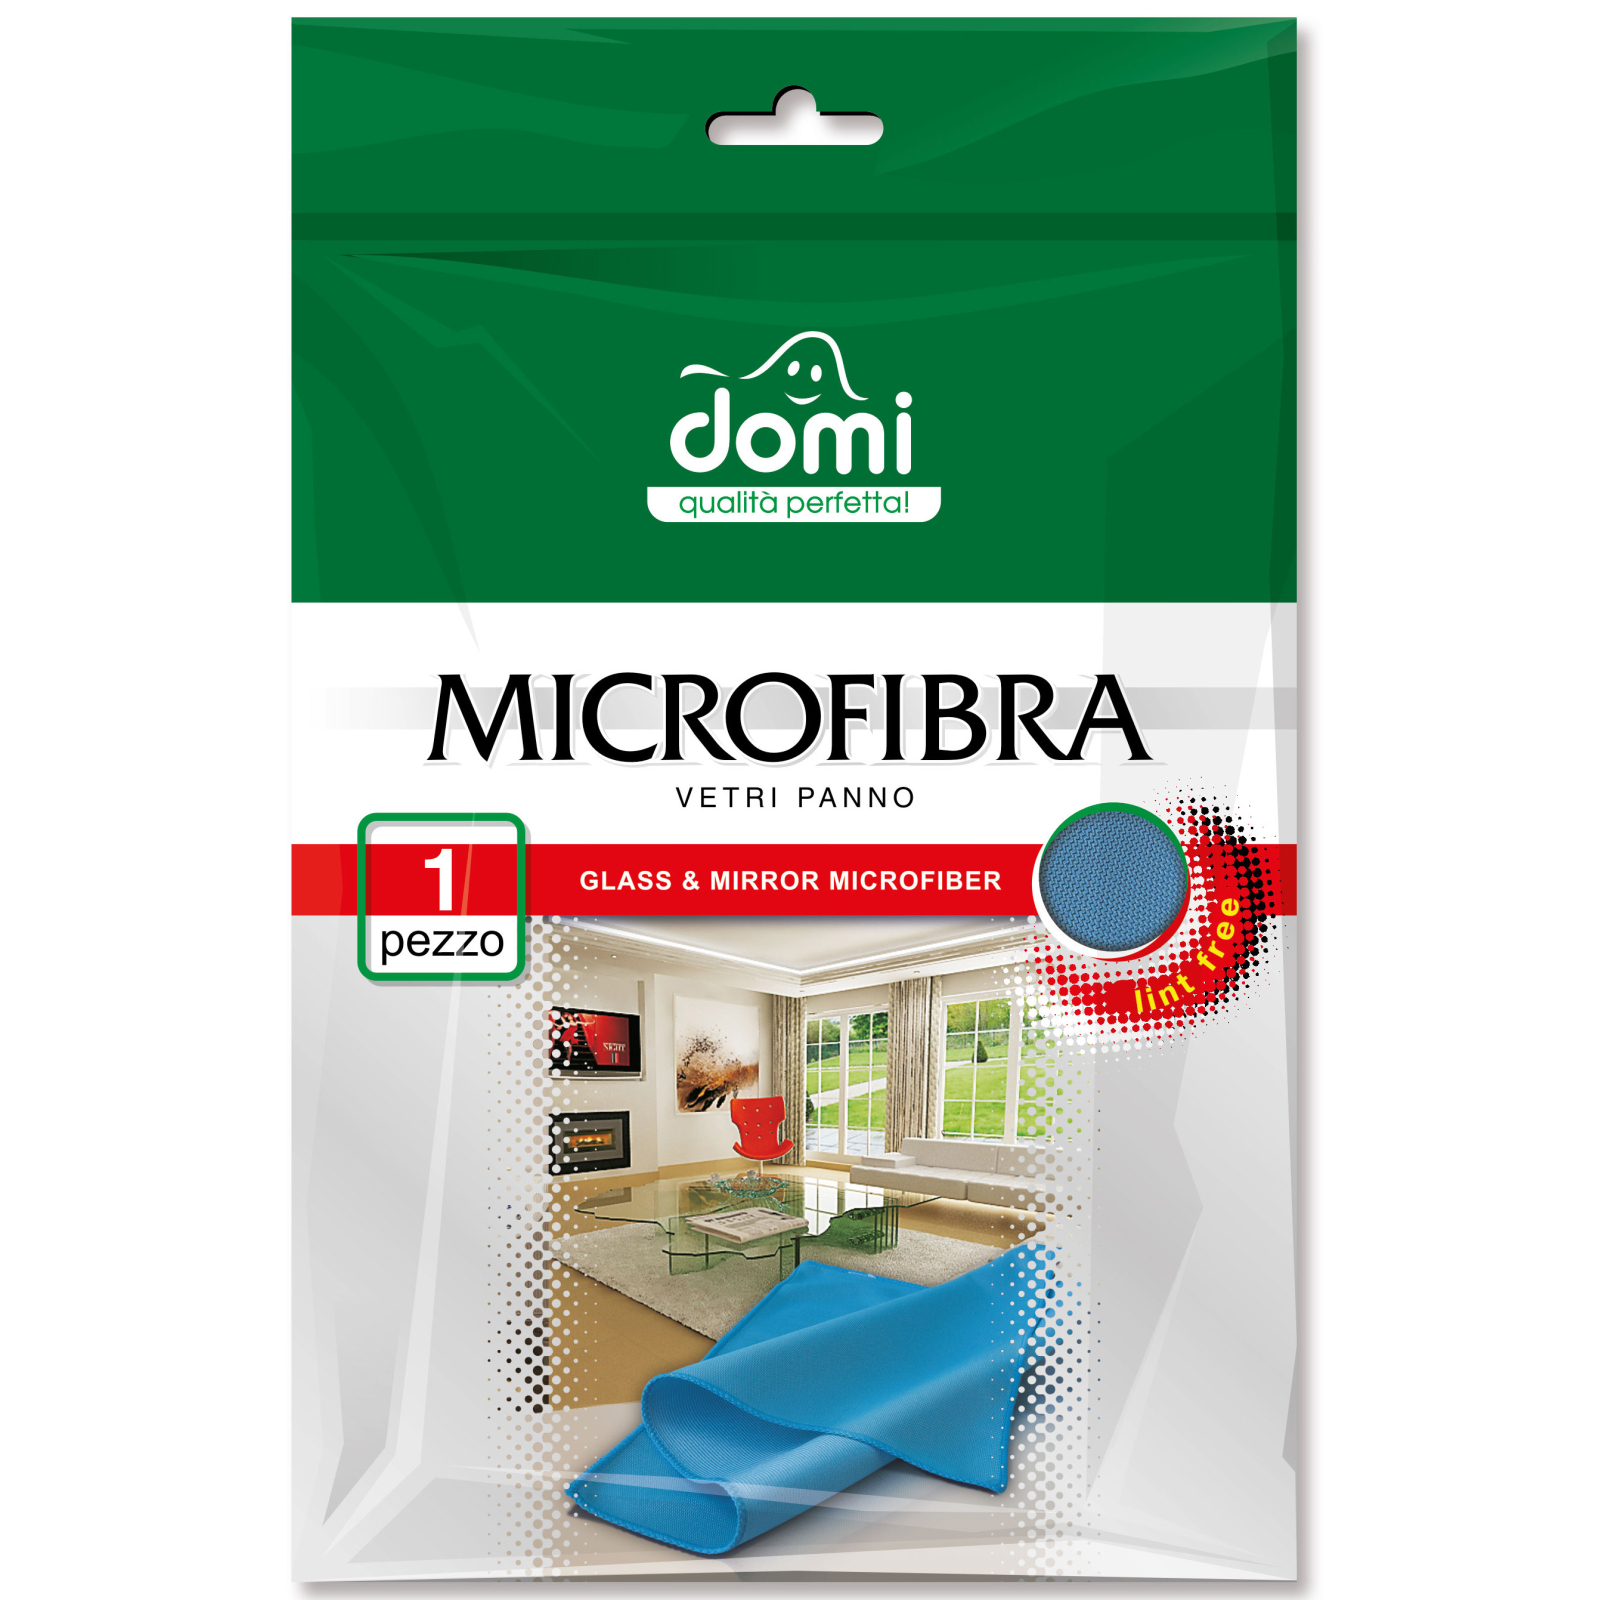 Серветки для прибирання Domi микрофибра для стекла и зеркал 1 шт (4823058315027)